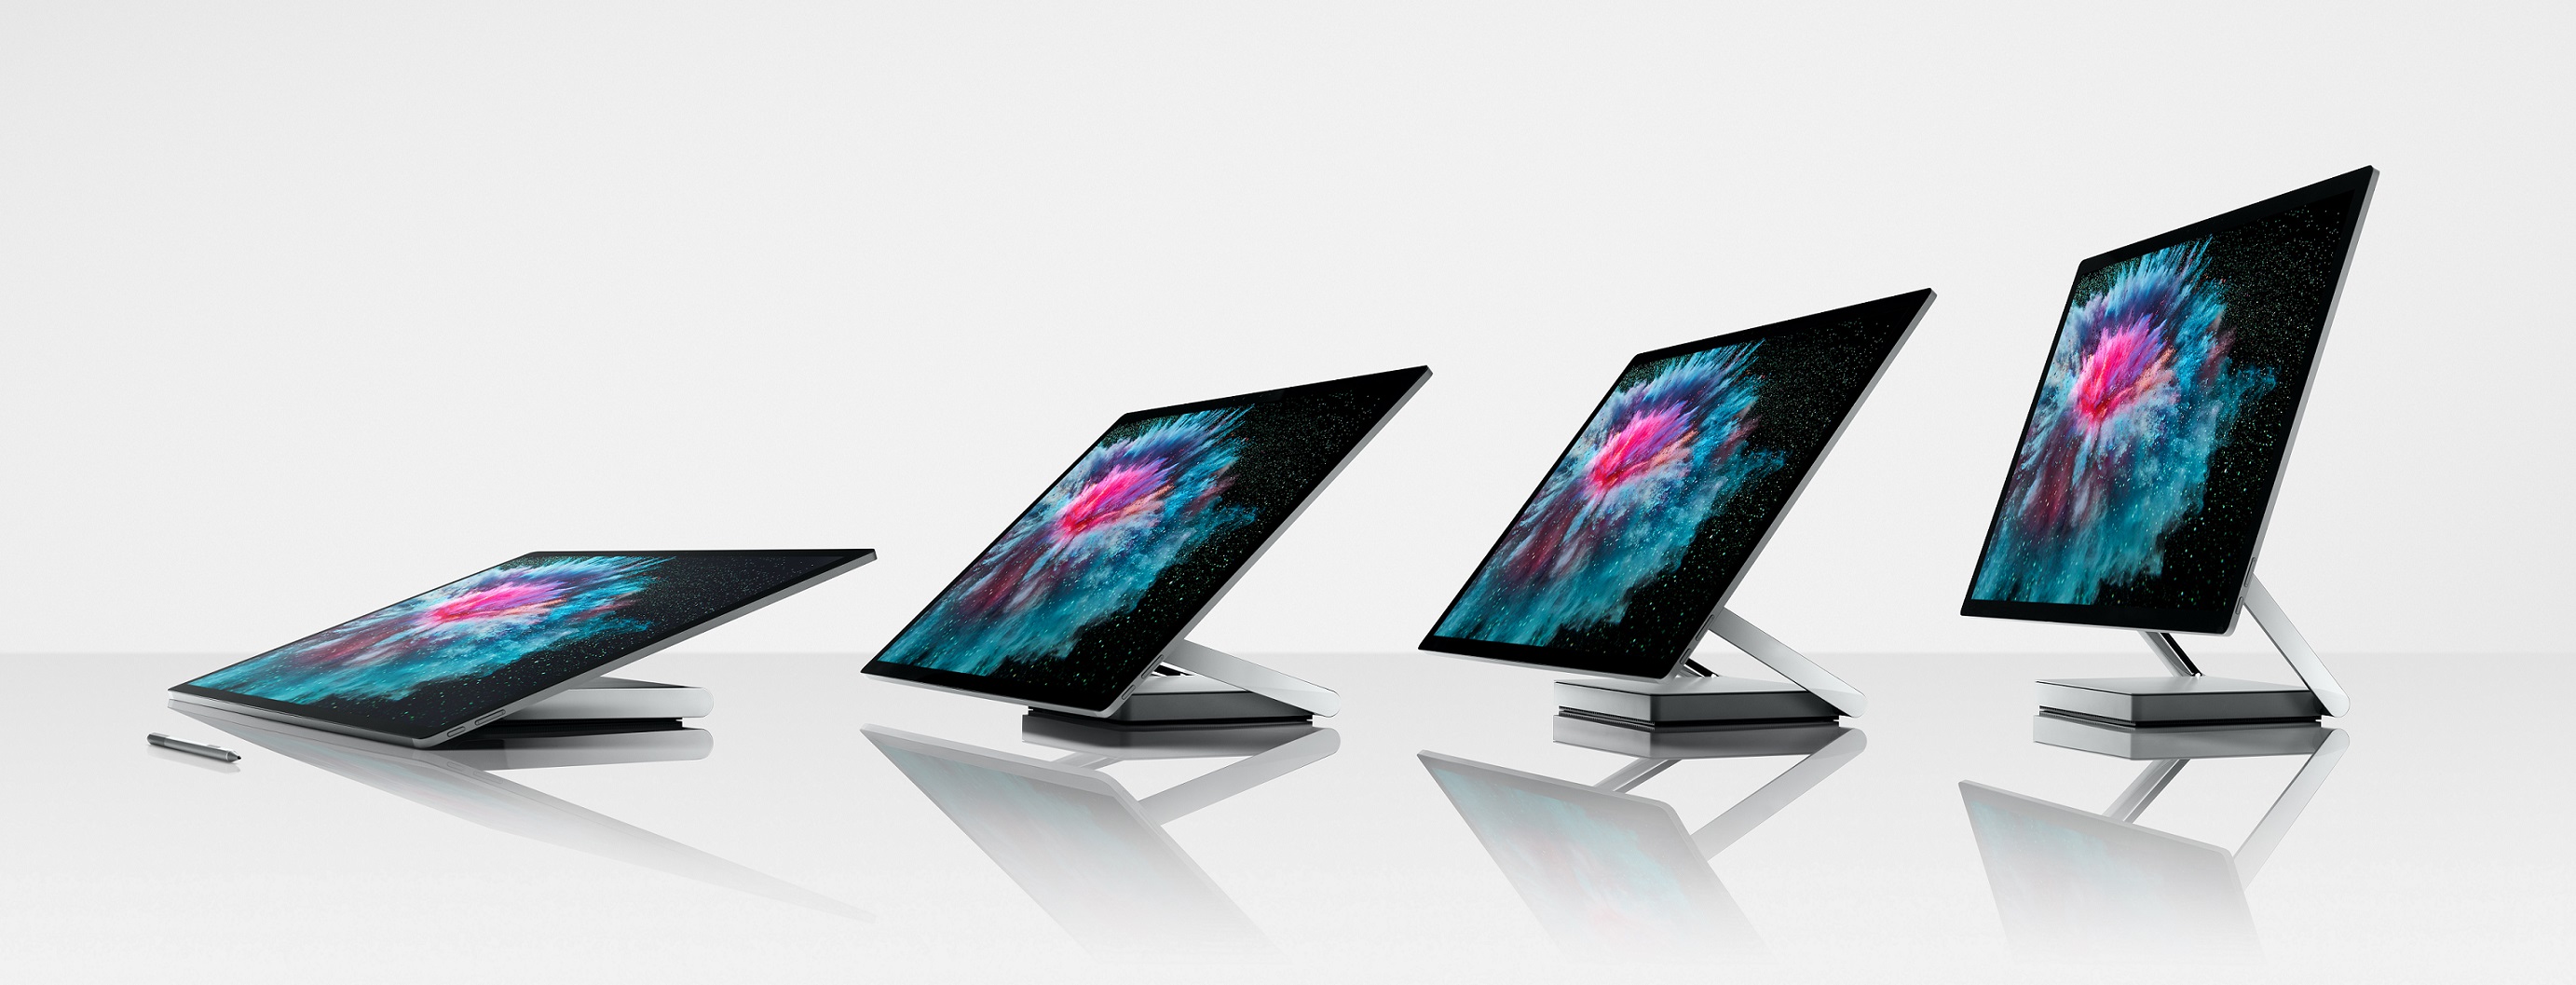 Surface Studio 2完全滿足創作者對理想裝置的想像，亮度、對比度提升，並經過校準提供貼近真實的色彩，同時搭載新一代Pascal架構、效能提升50%的GPU 與固態硬碟。使用者將可在這個令人驚豔的28吋螢幕上盡情創作、享受沉浸式體驗。